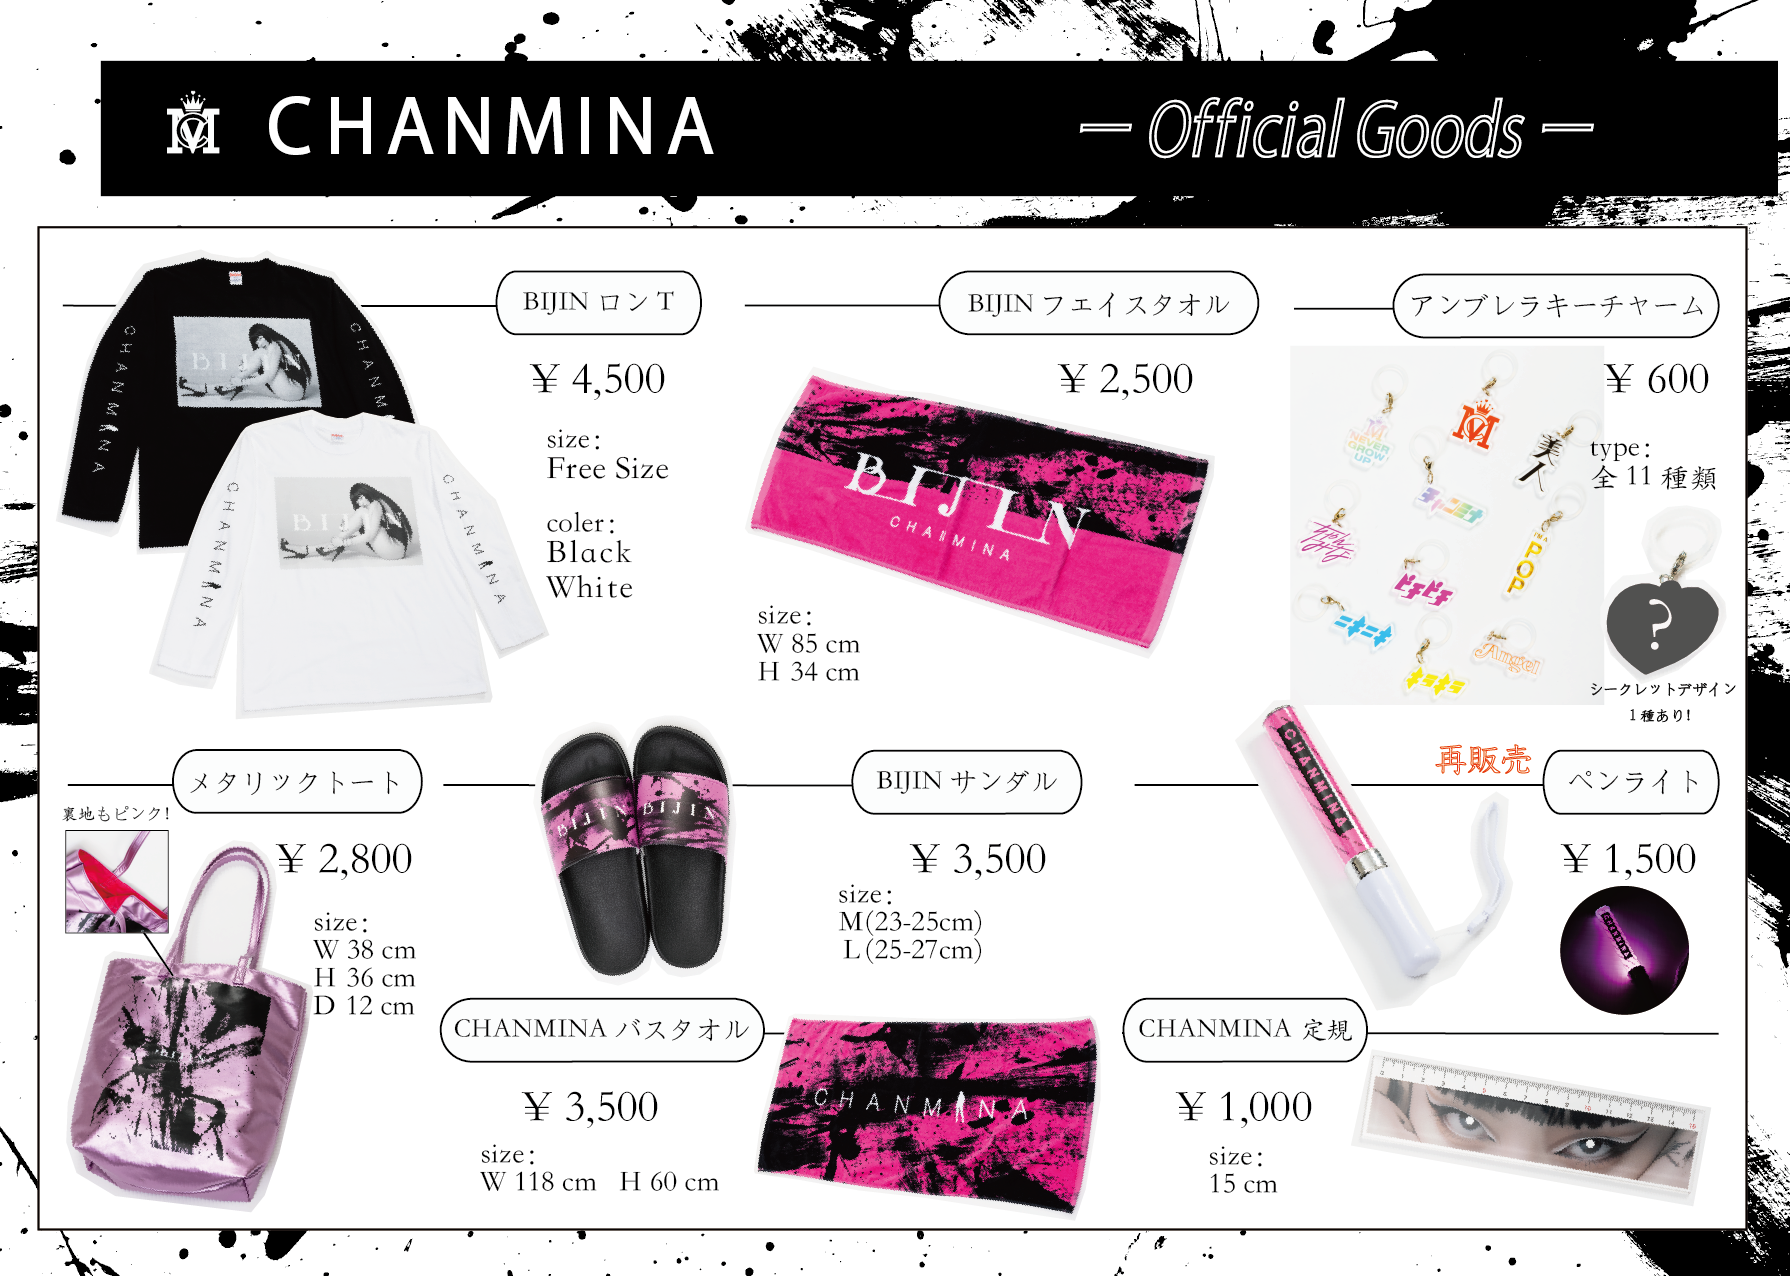 The Princess Project 5 新規グッズ販売 Ec先行販売のお知らせ Chanmina Official Site